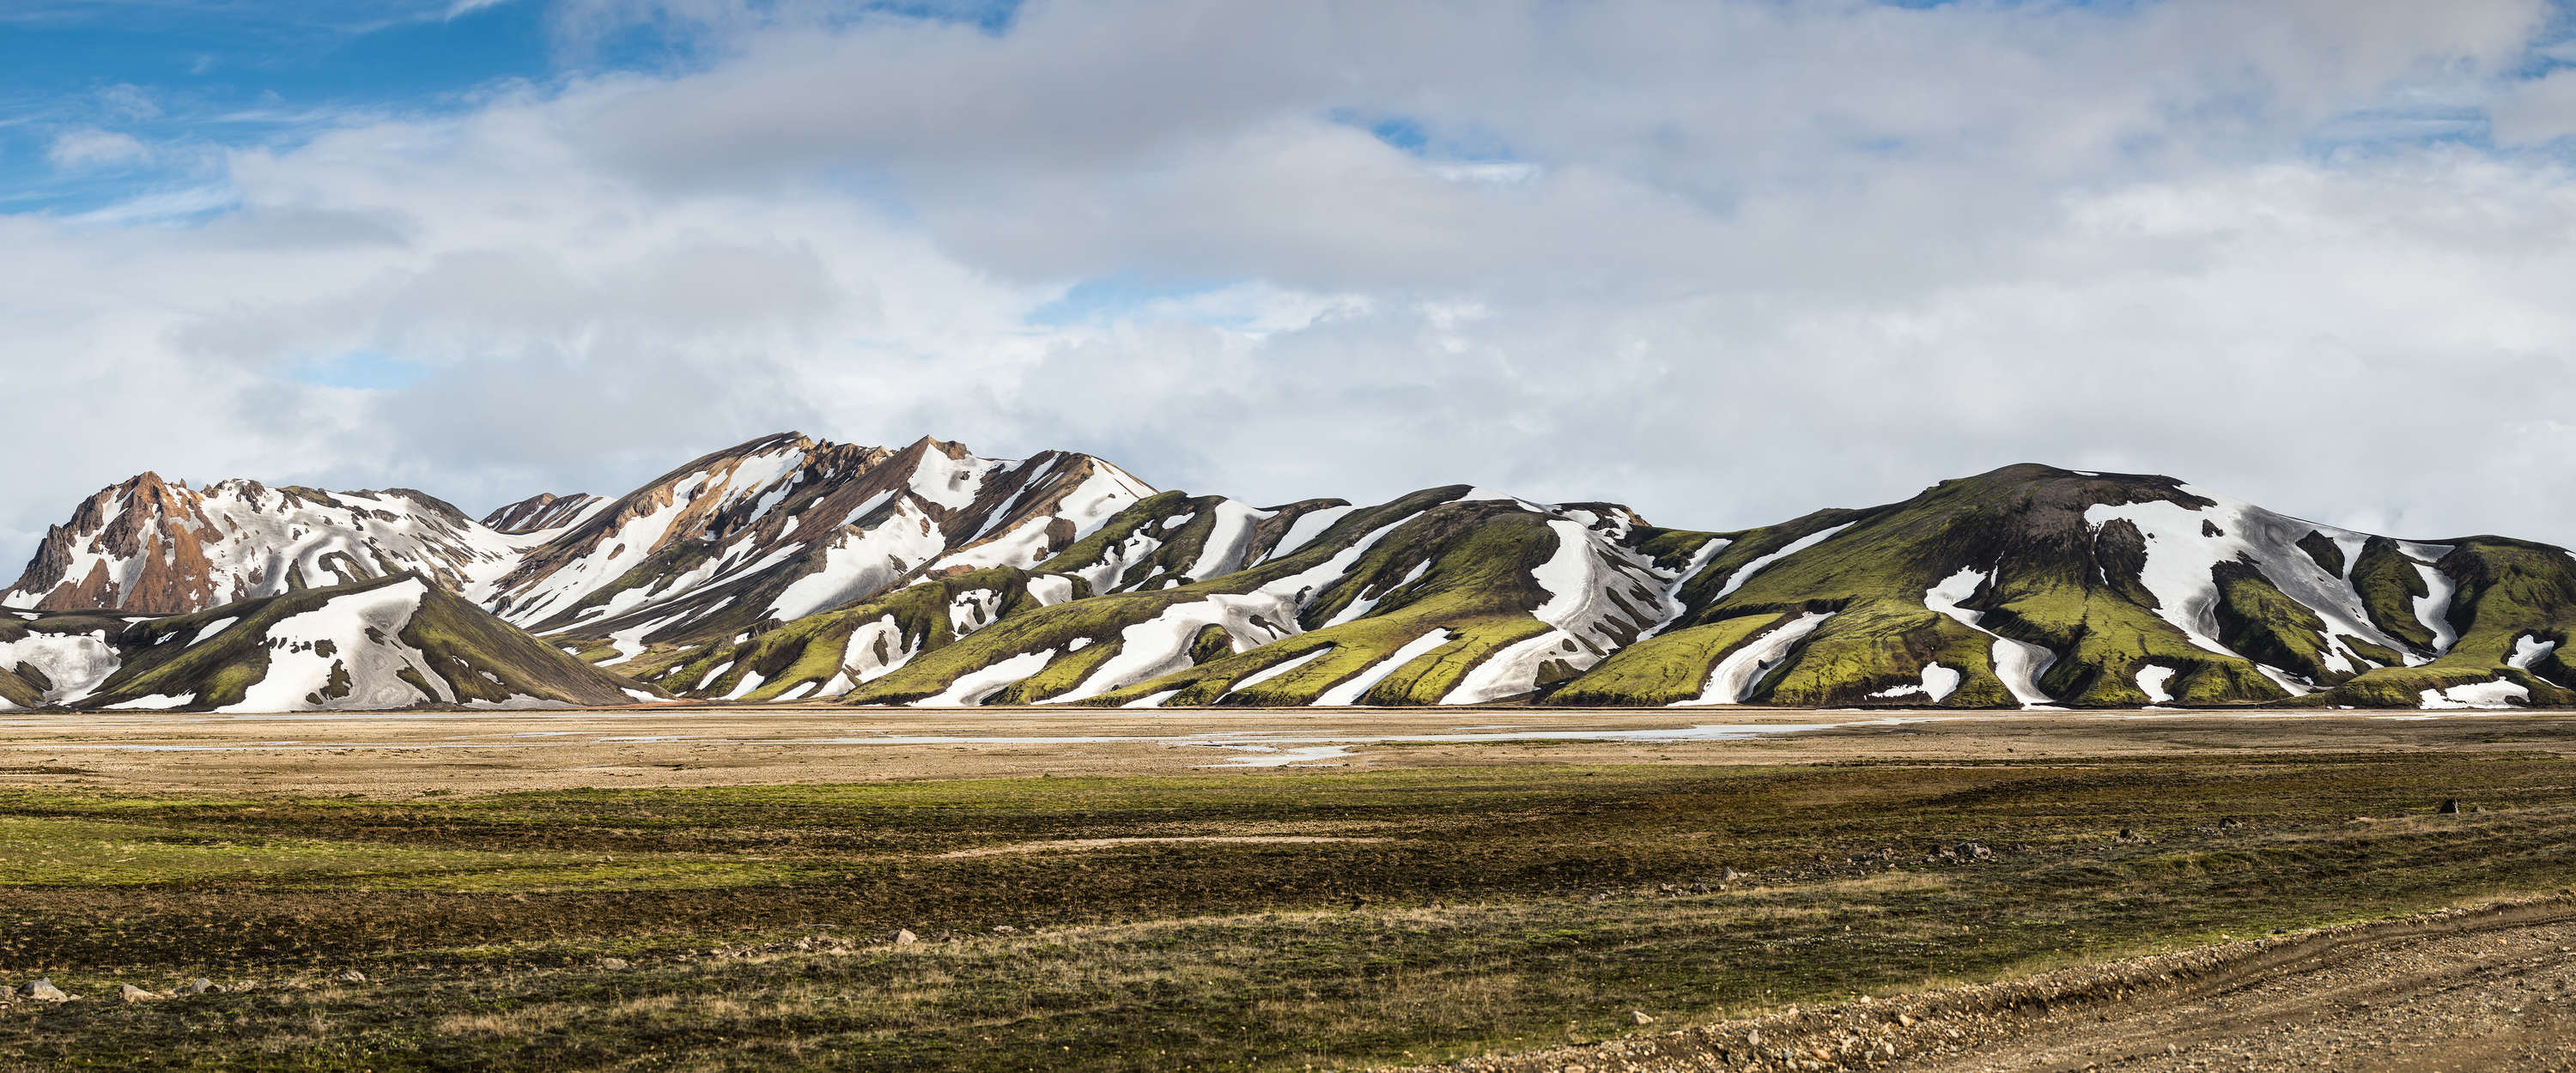             Panorama Fototapete auf isländische Berge
        